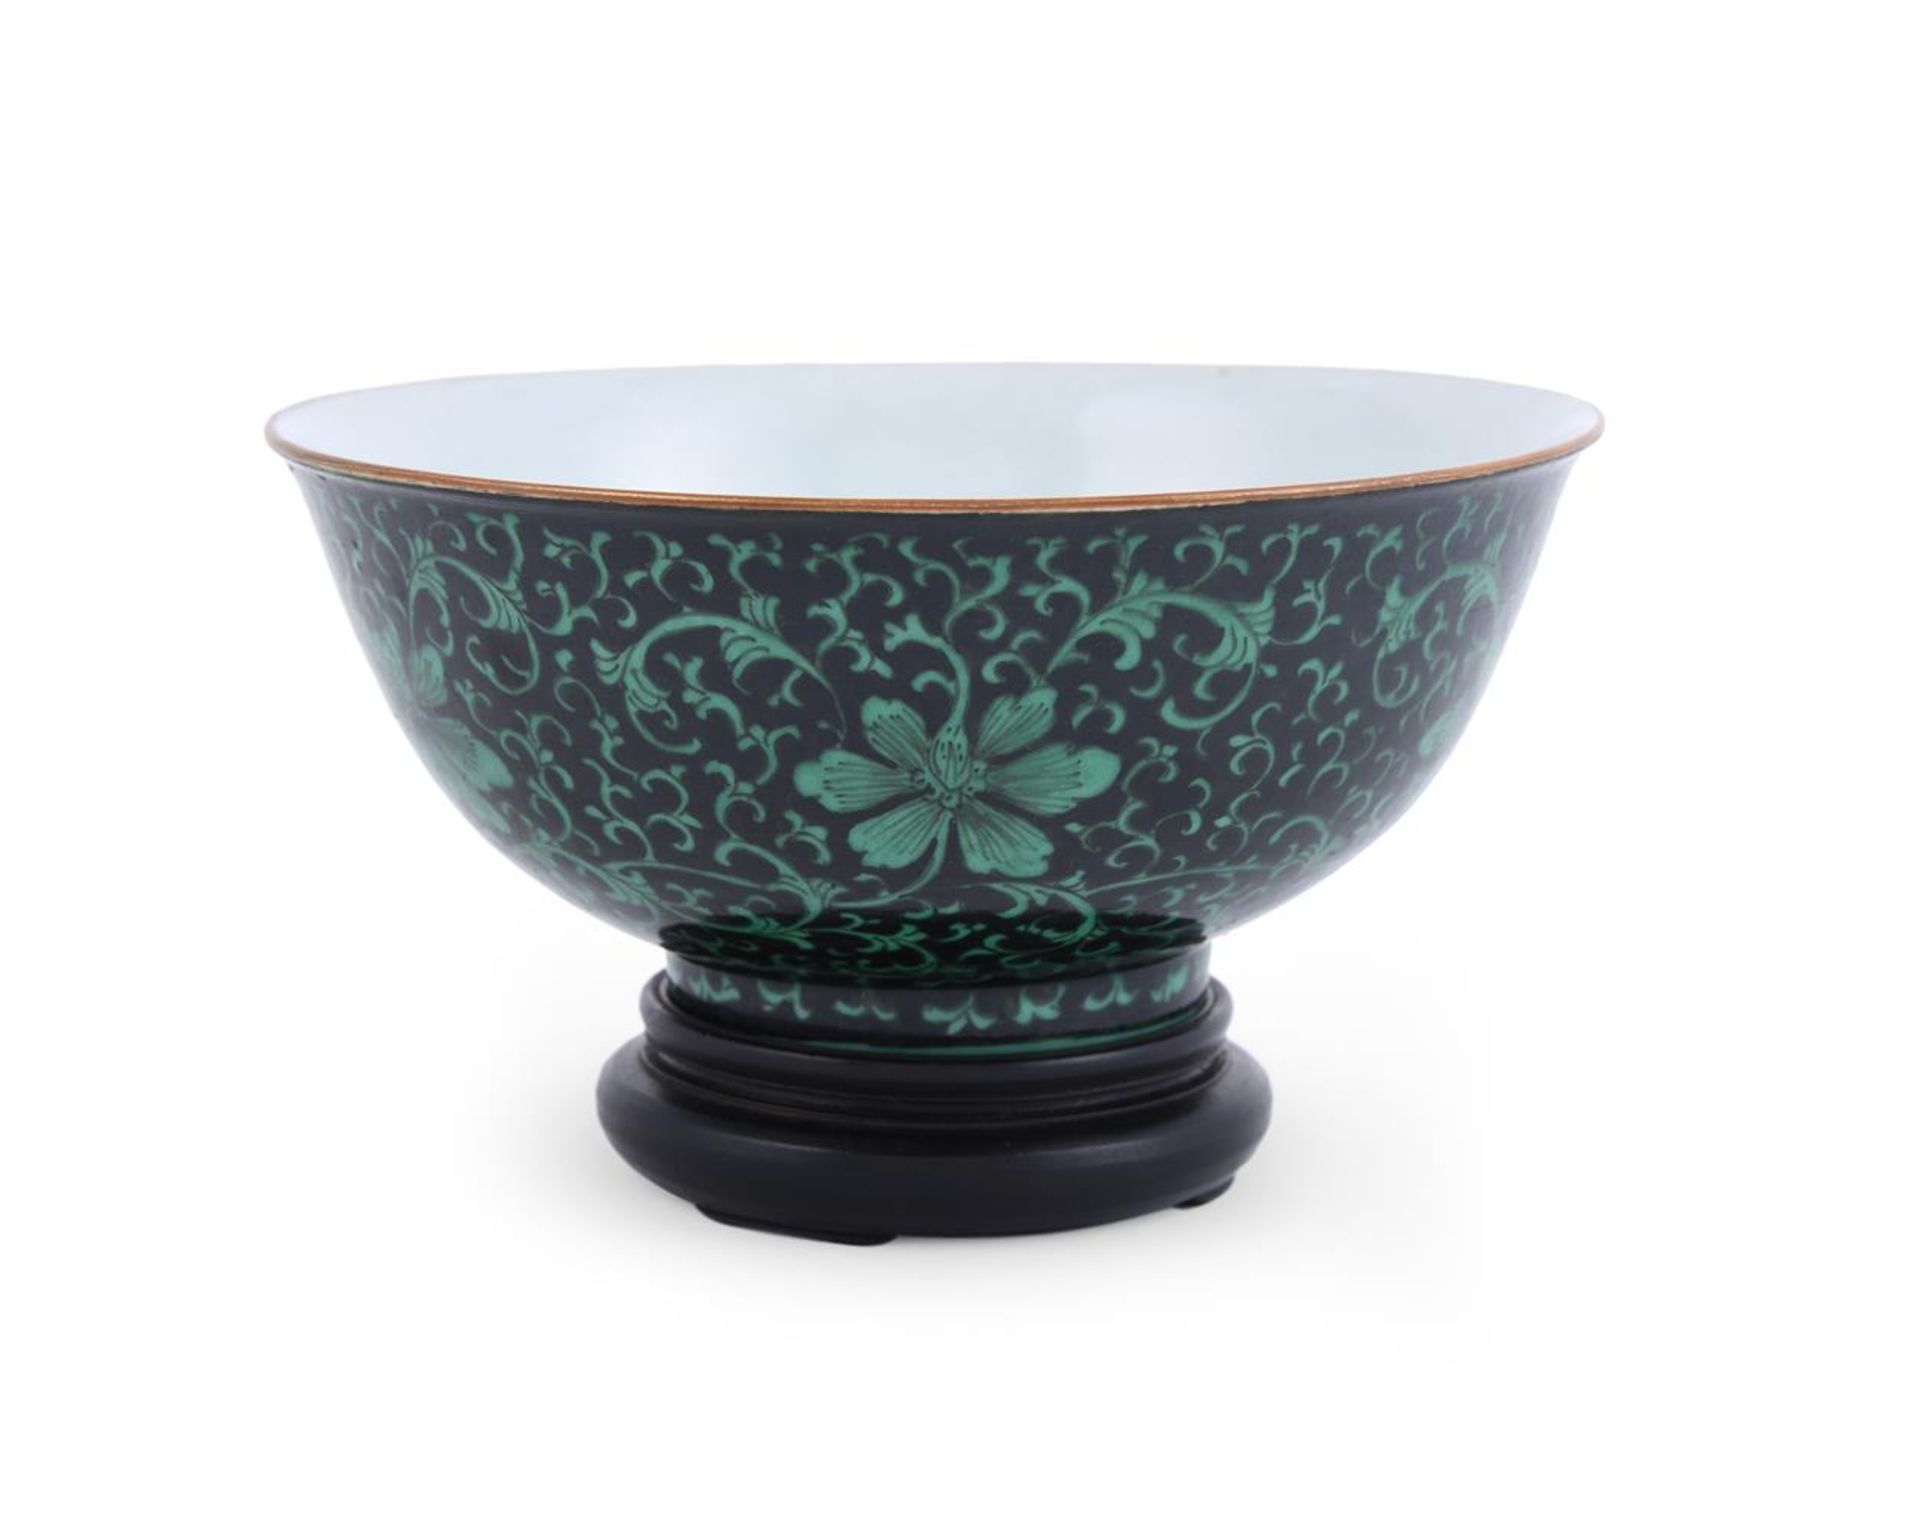 A Chinese black-ground green-enamelled 'Lotus' bowl